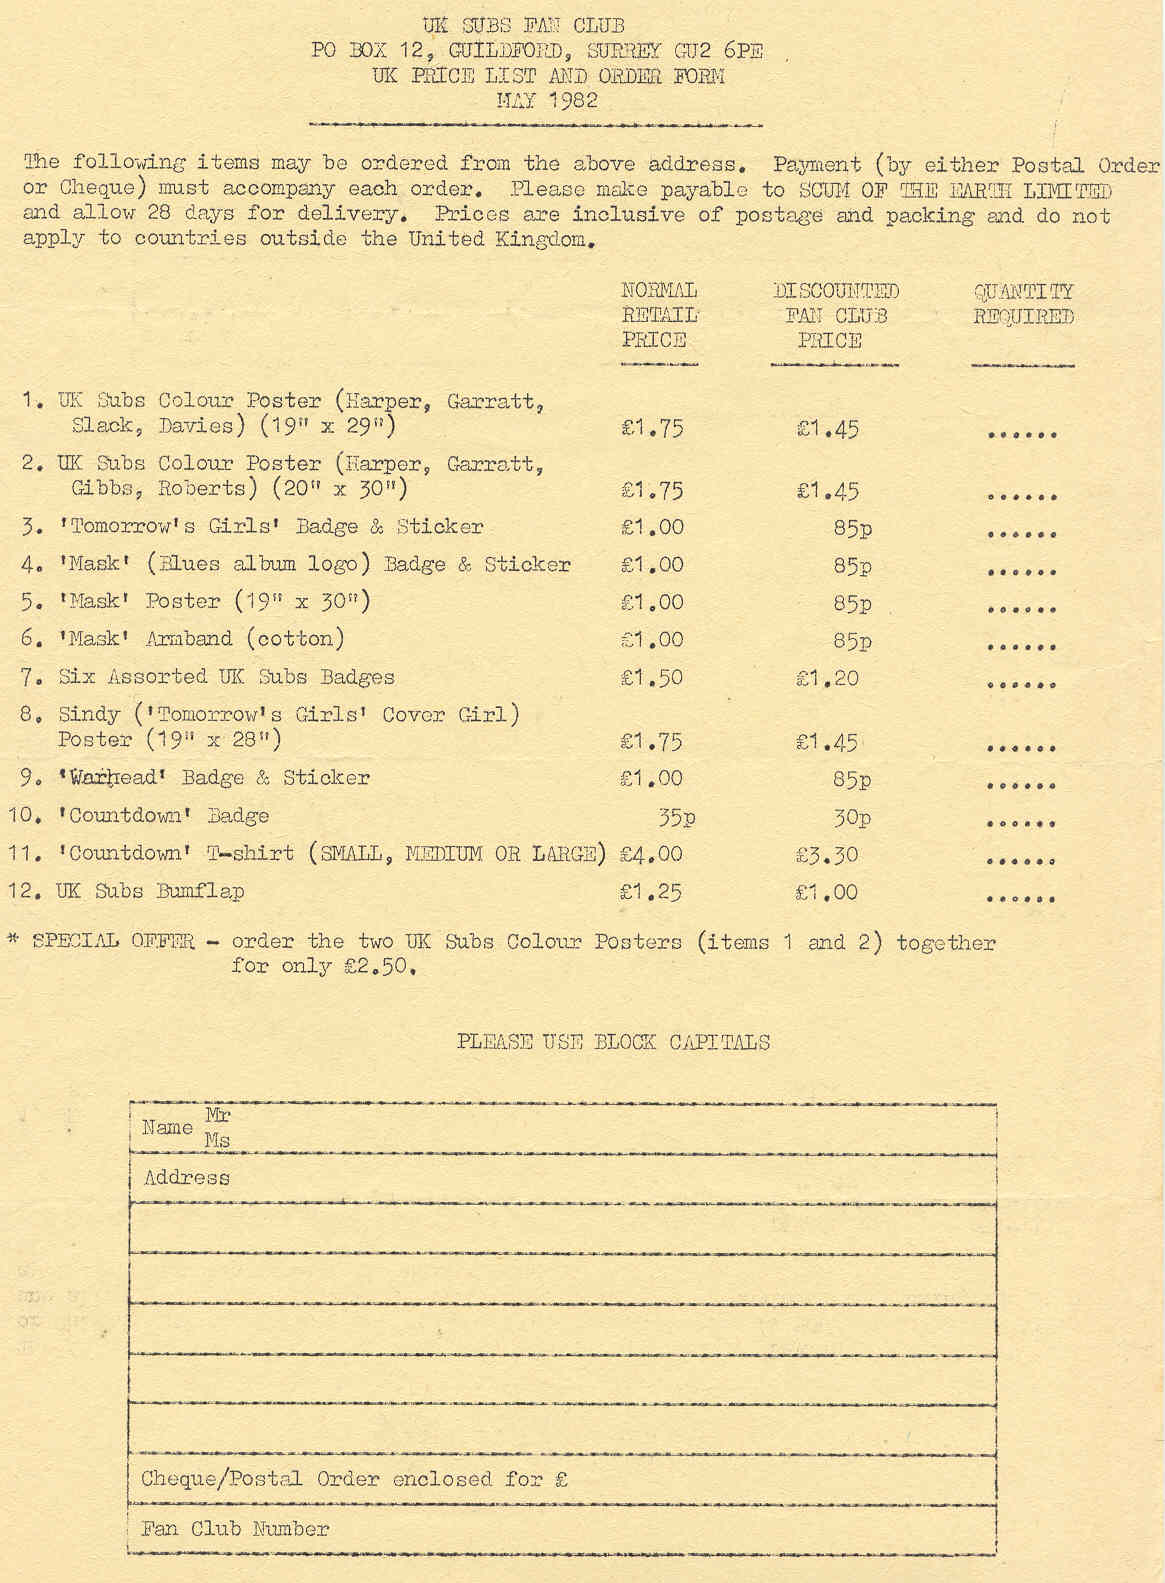 FC_Price_List_May_1982.jpg